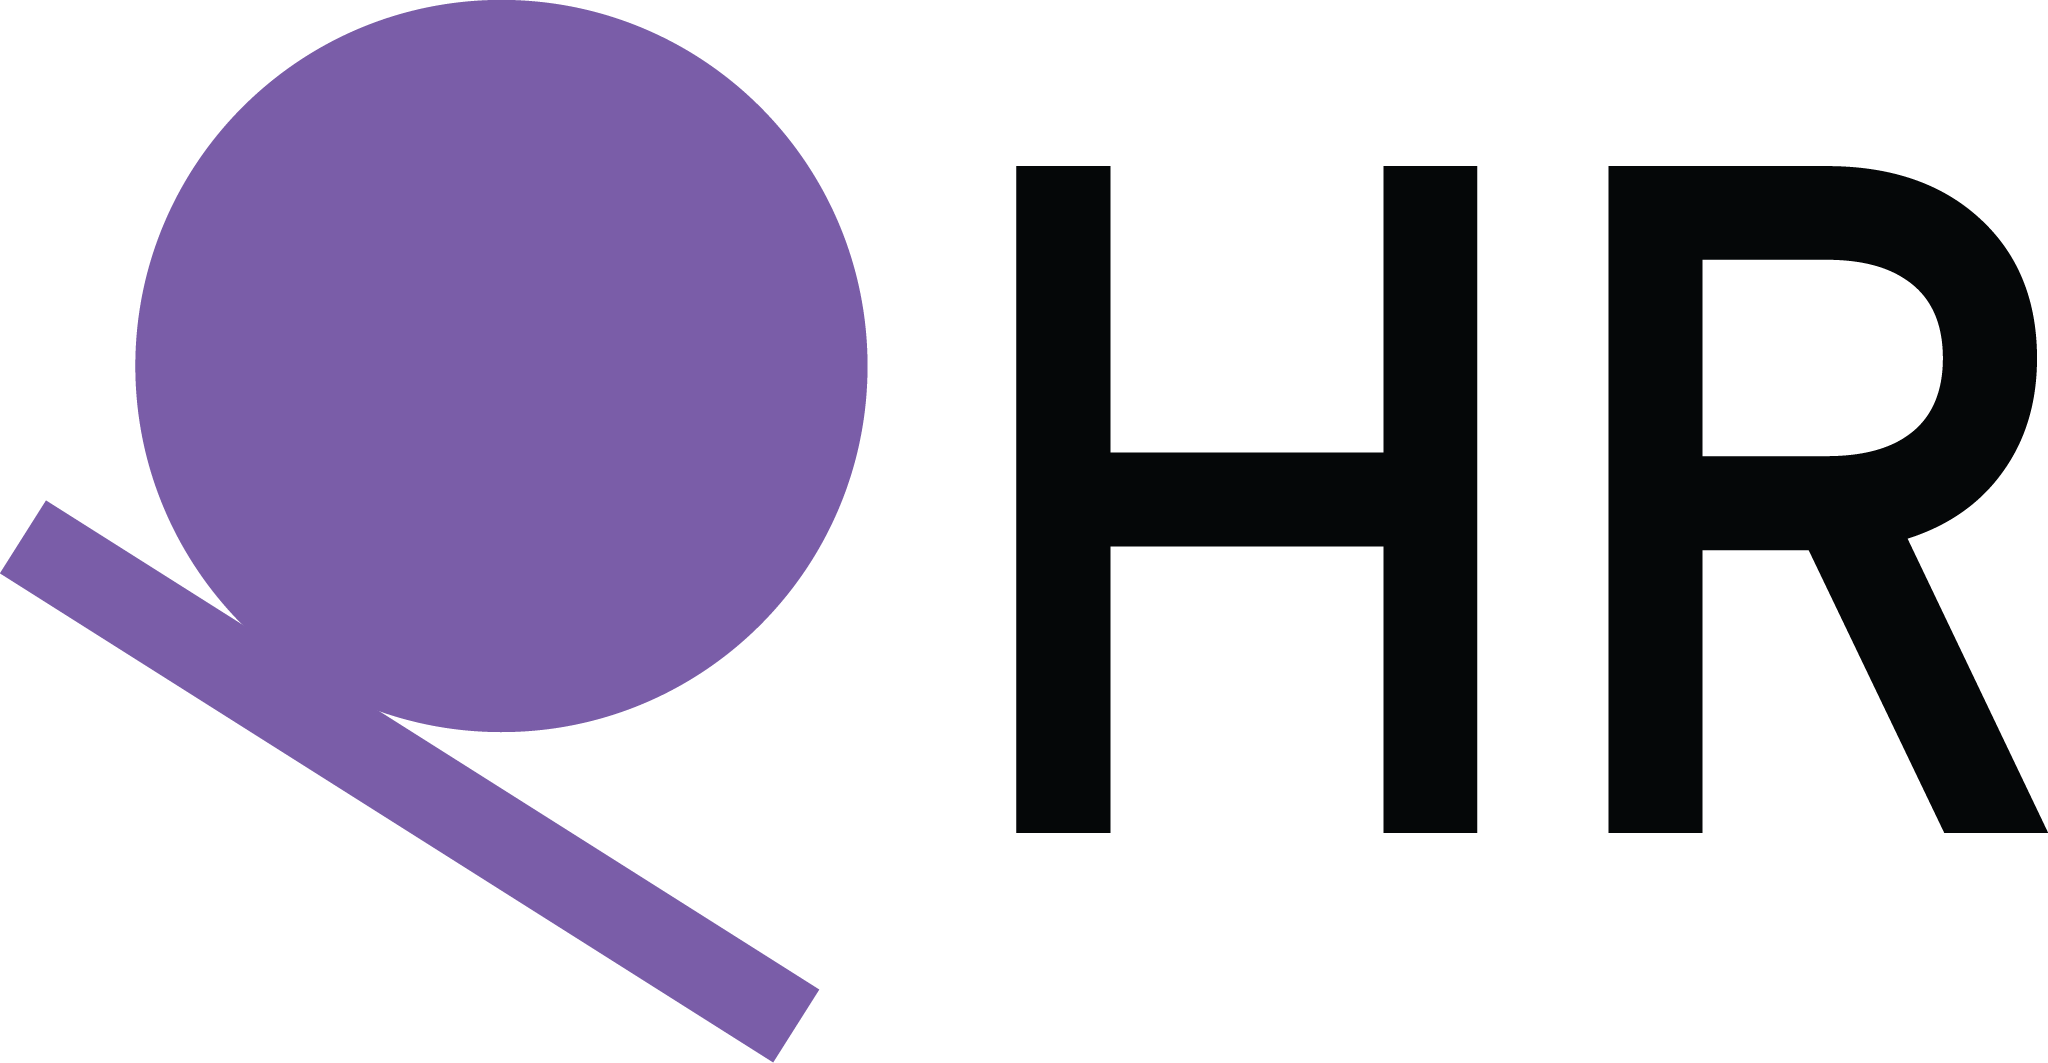 ZeroHR logo